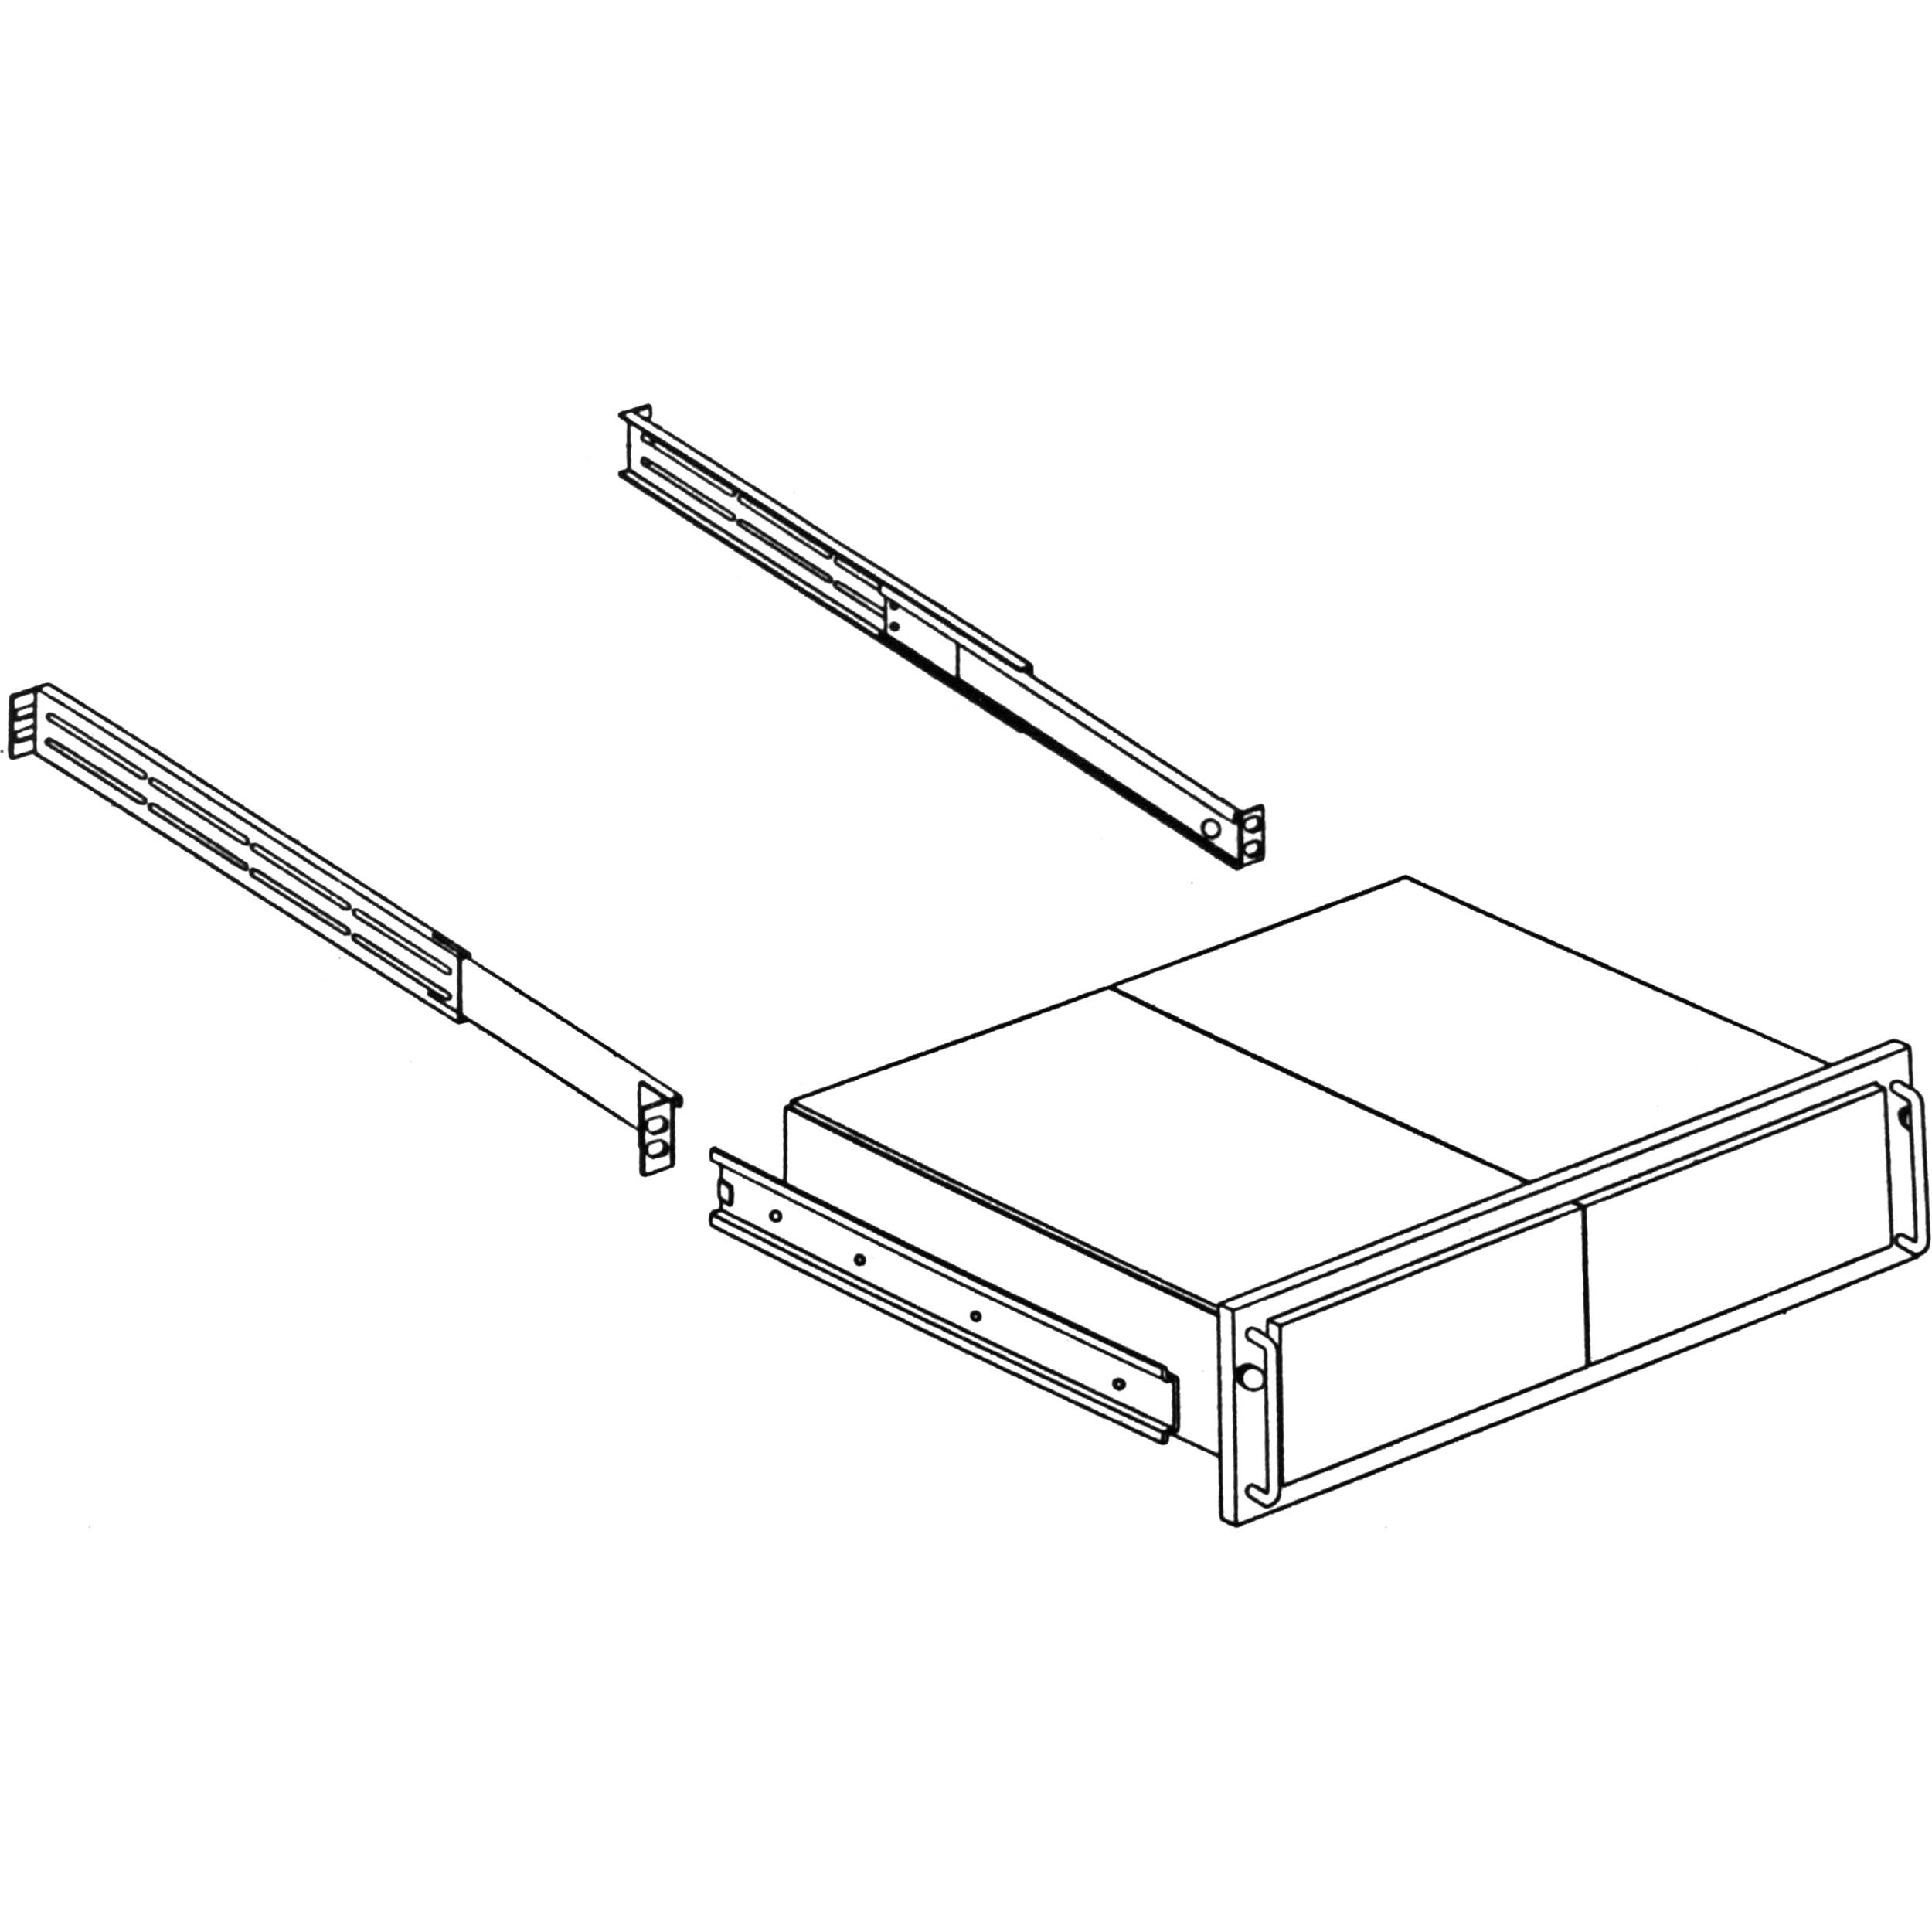 FEC Single/Dual Rackslide Kit